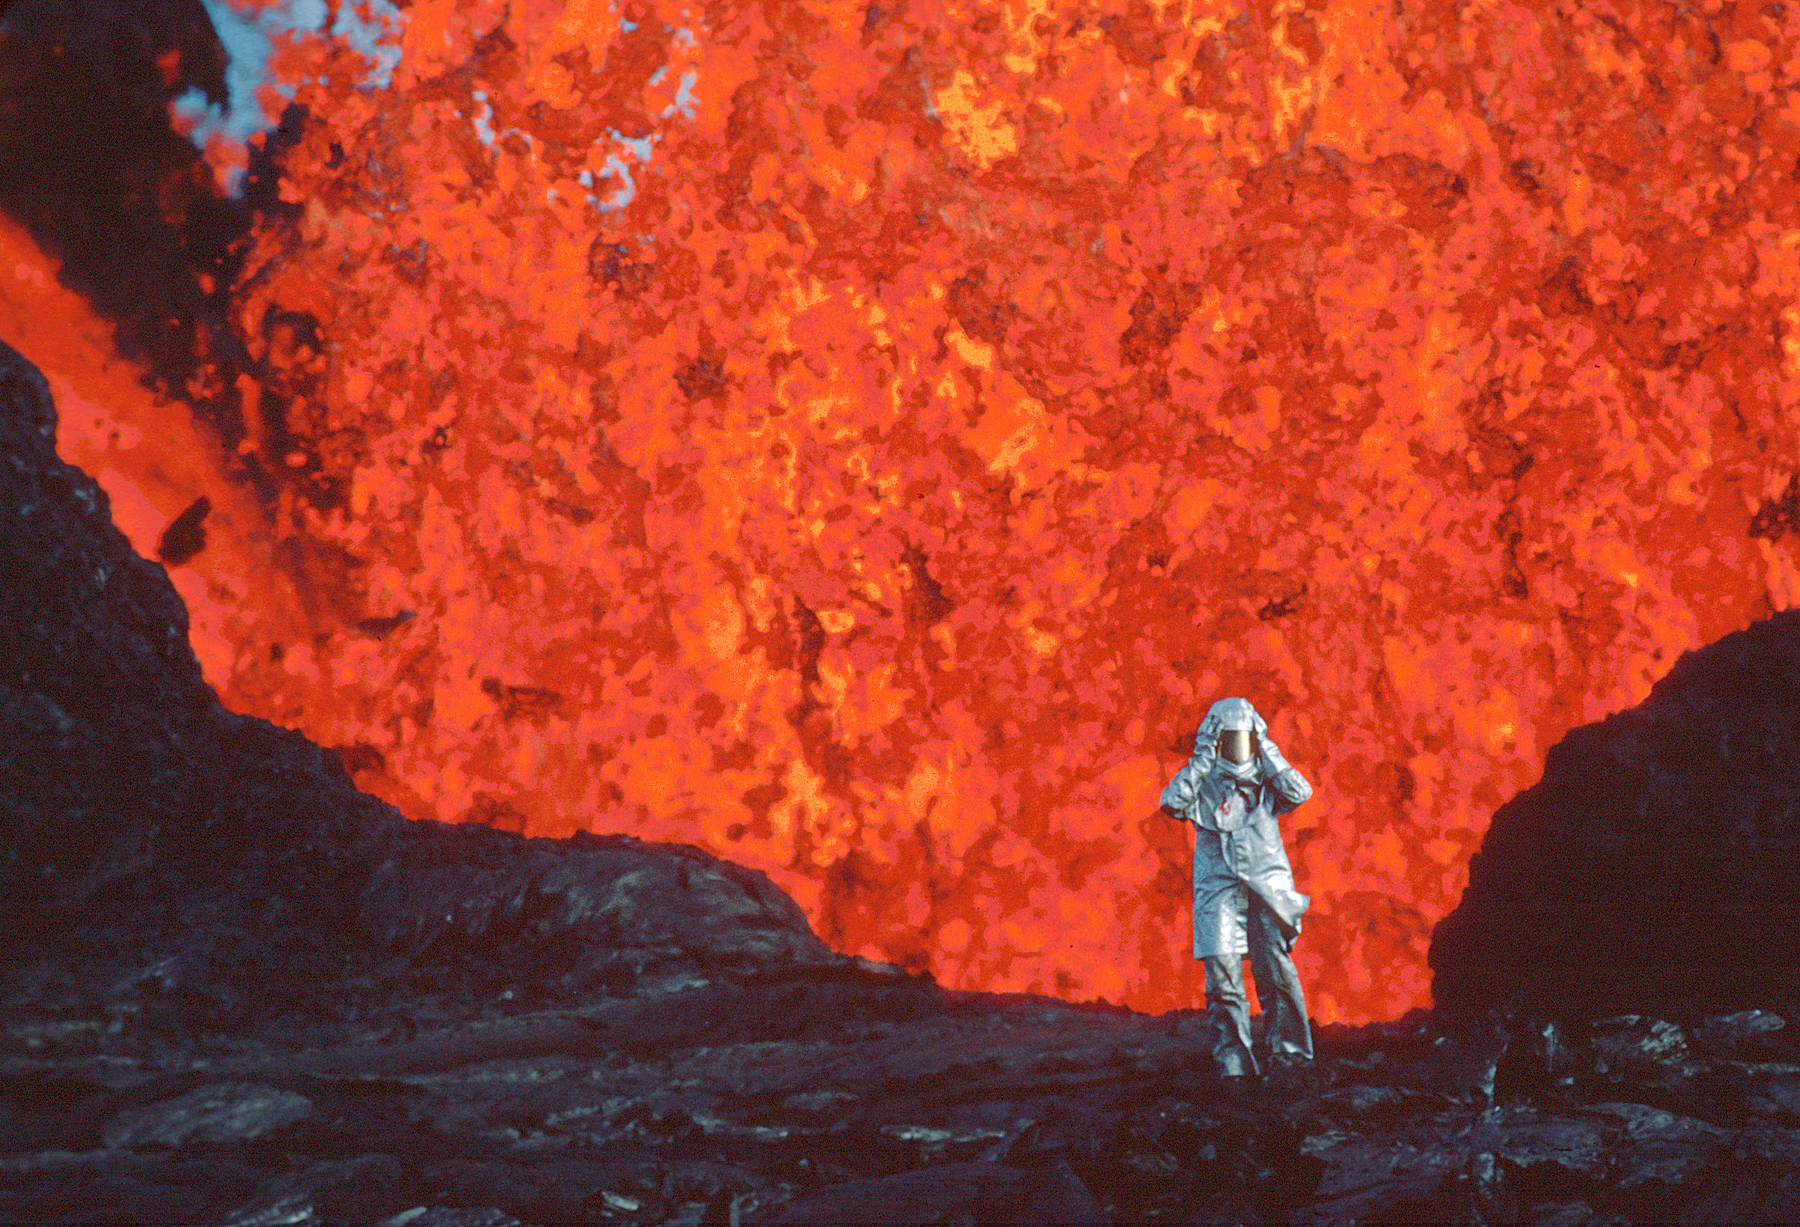 Katia Krafft wearing aluminized suit standing near lava burst at Krafla Volcano, Iceland.